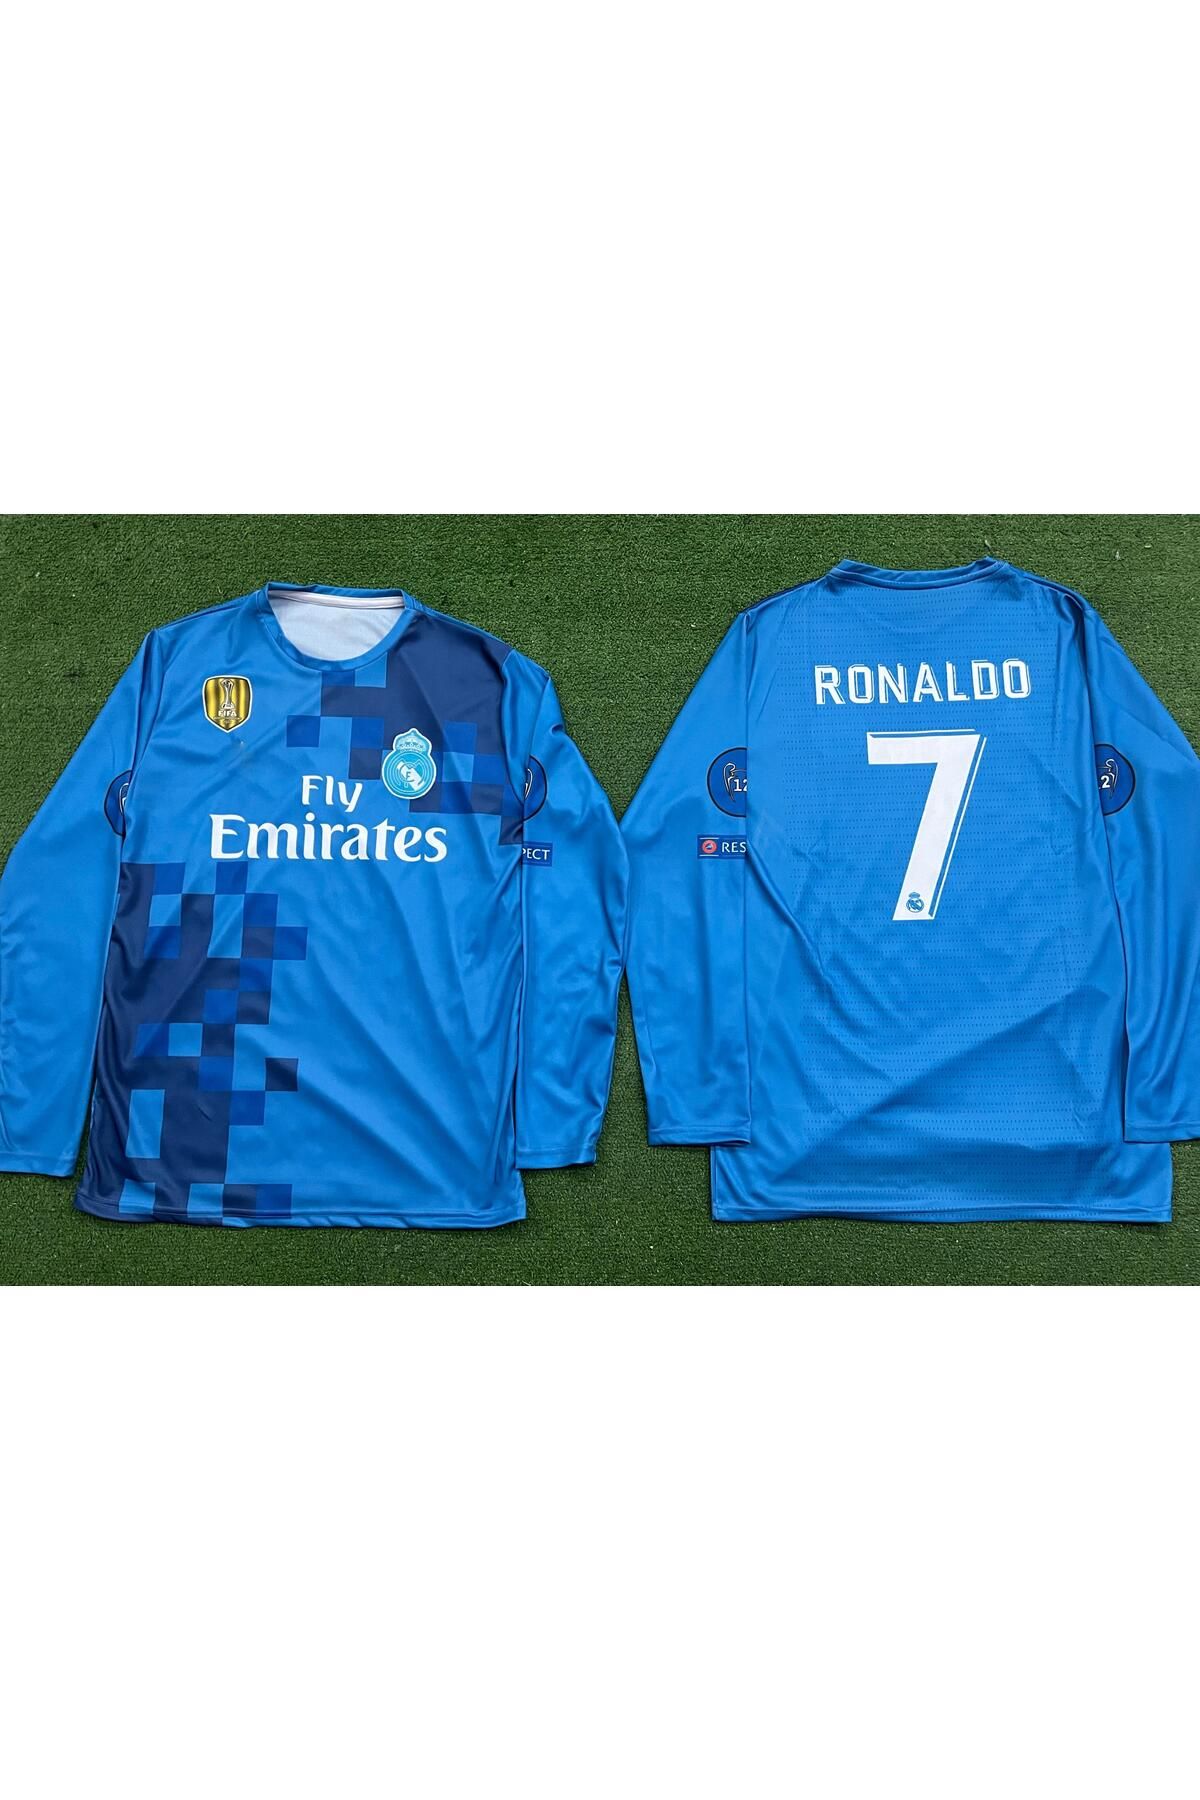 İeys Sport Real Madrid Cristiano Ronaldo 2017 2018 Şampiyonlar Ligi Turkuaz Renk Forma / 2018 Ronaldo Jersey